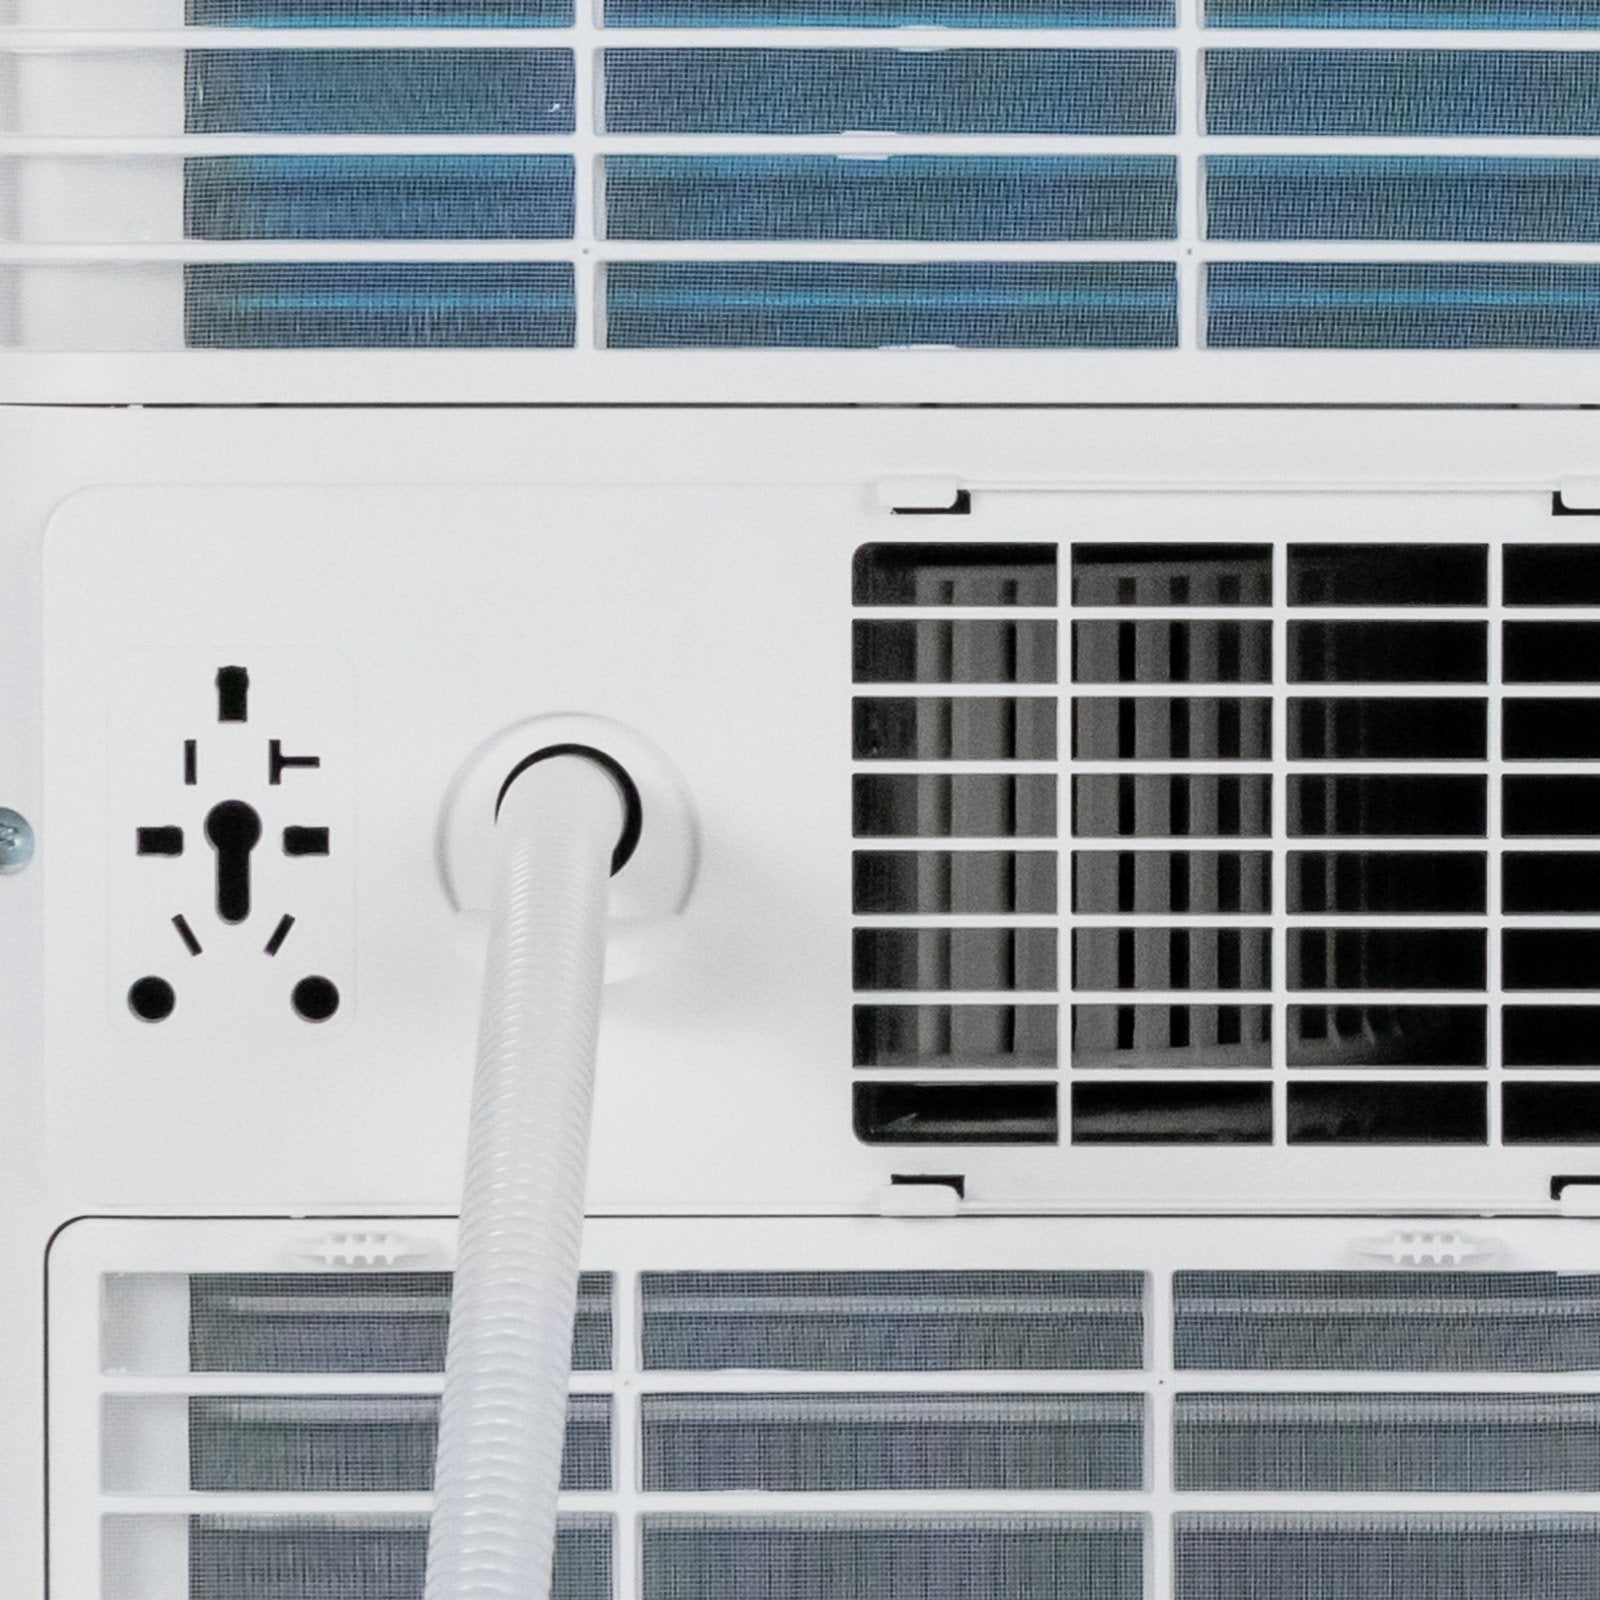 10000 BTU(Ashrae) Portable Air Conditioner with Fan Dehumidifier Sleep Mode - Gallery Canada